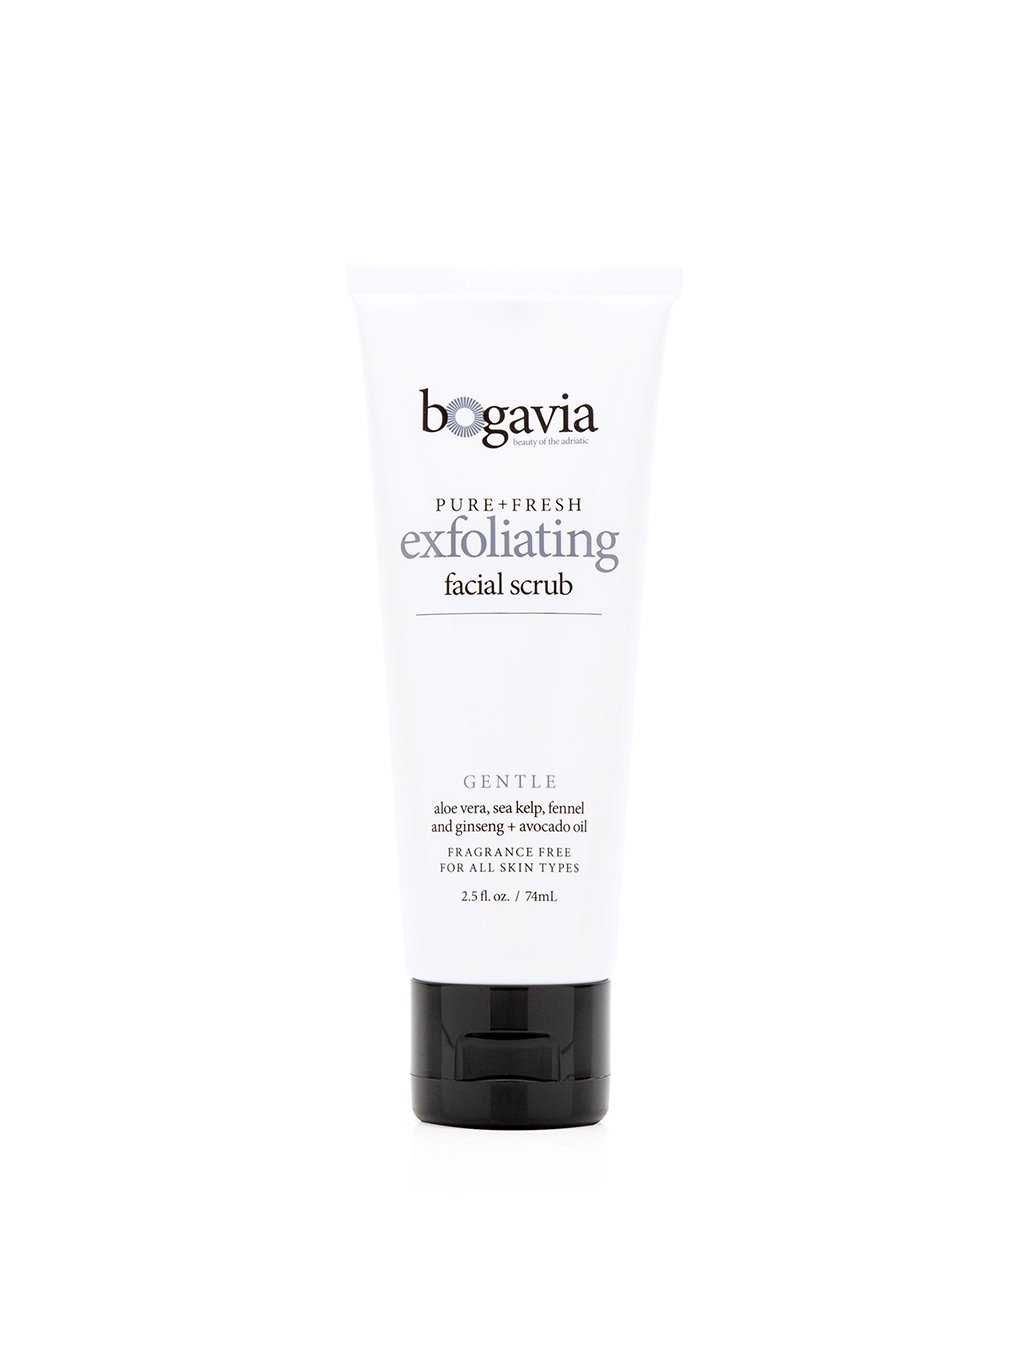 Bogavia The Exfoliating Facial Scrub, signs you need to exfoliate